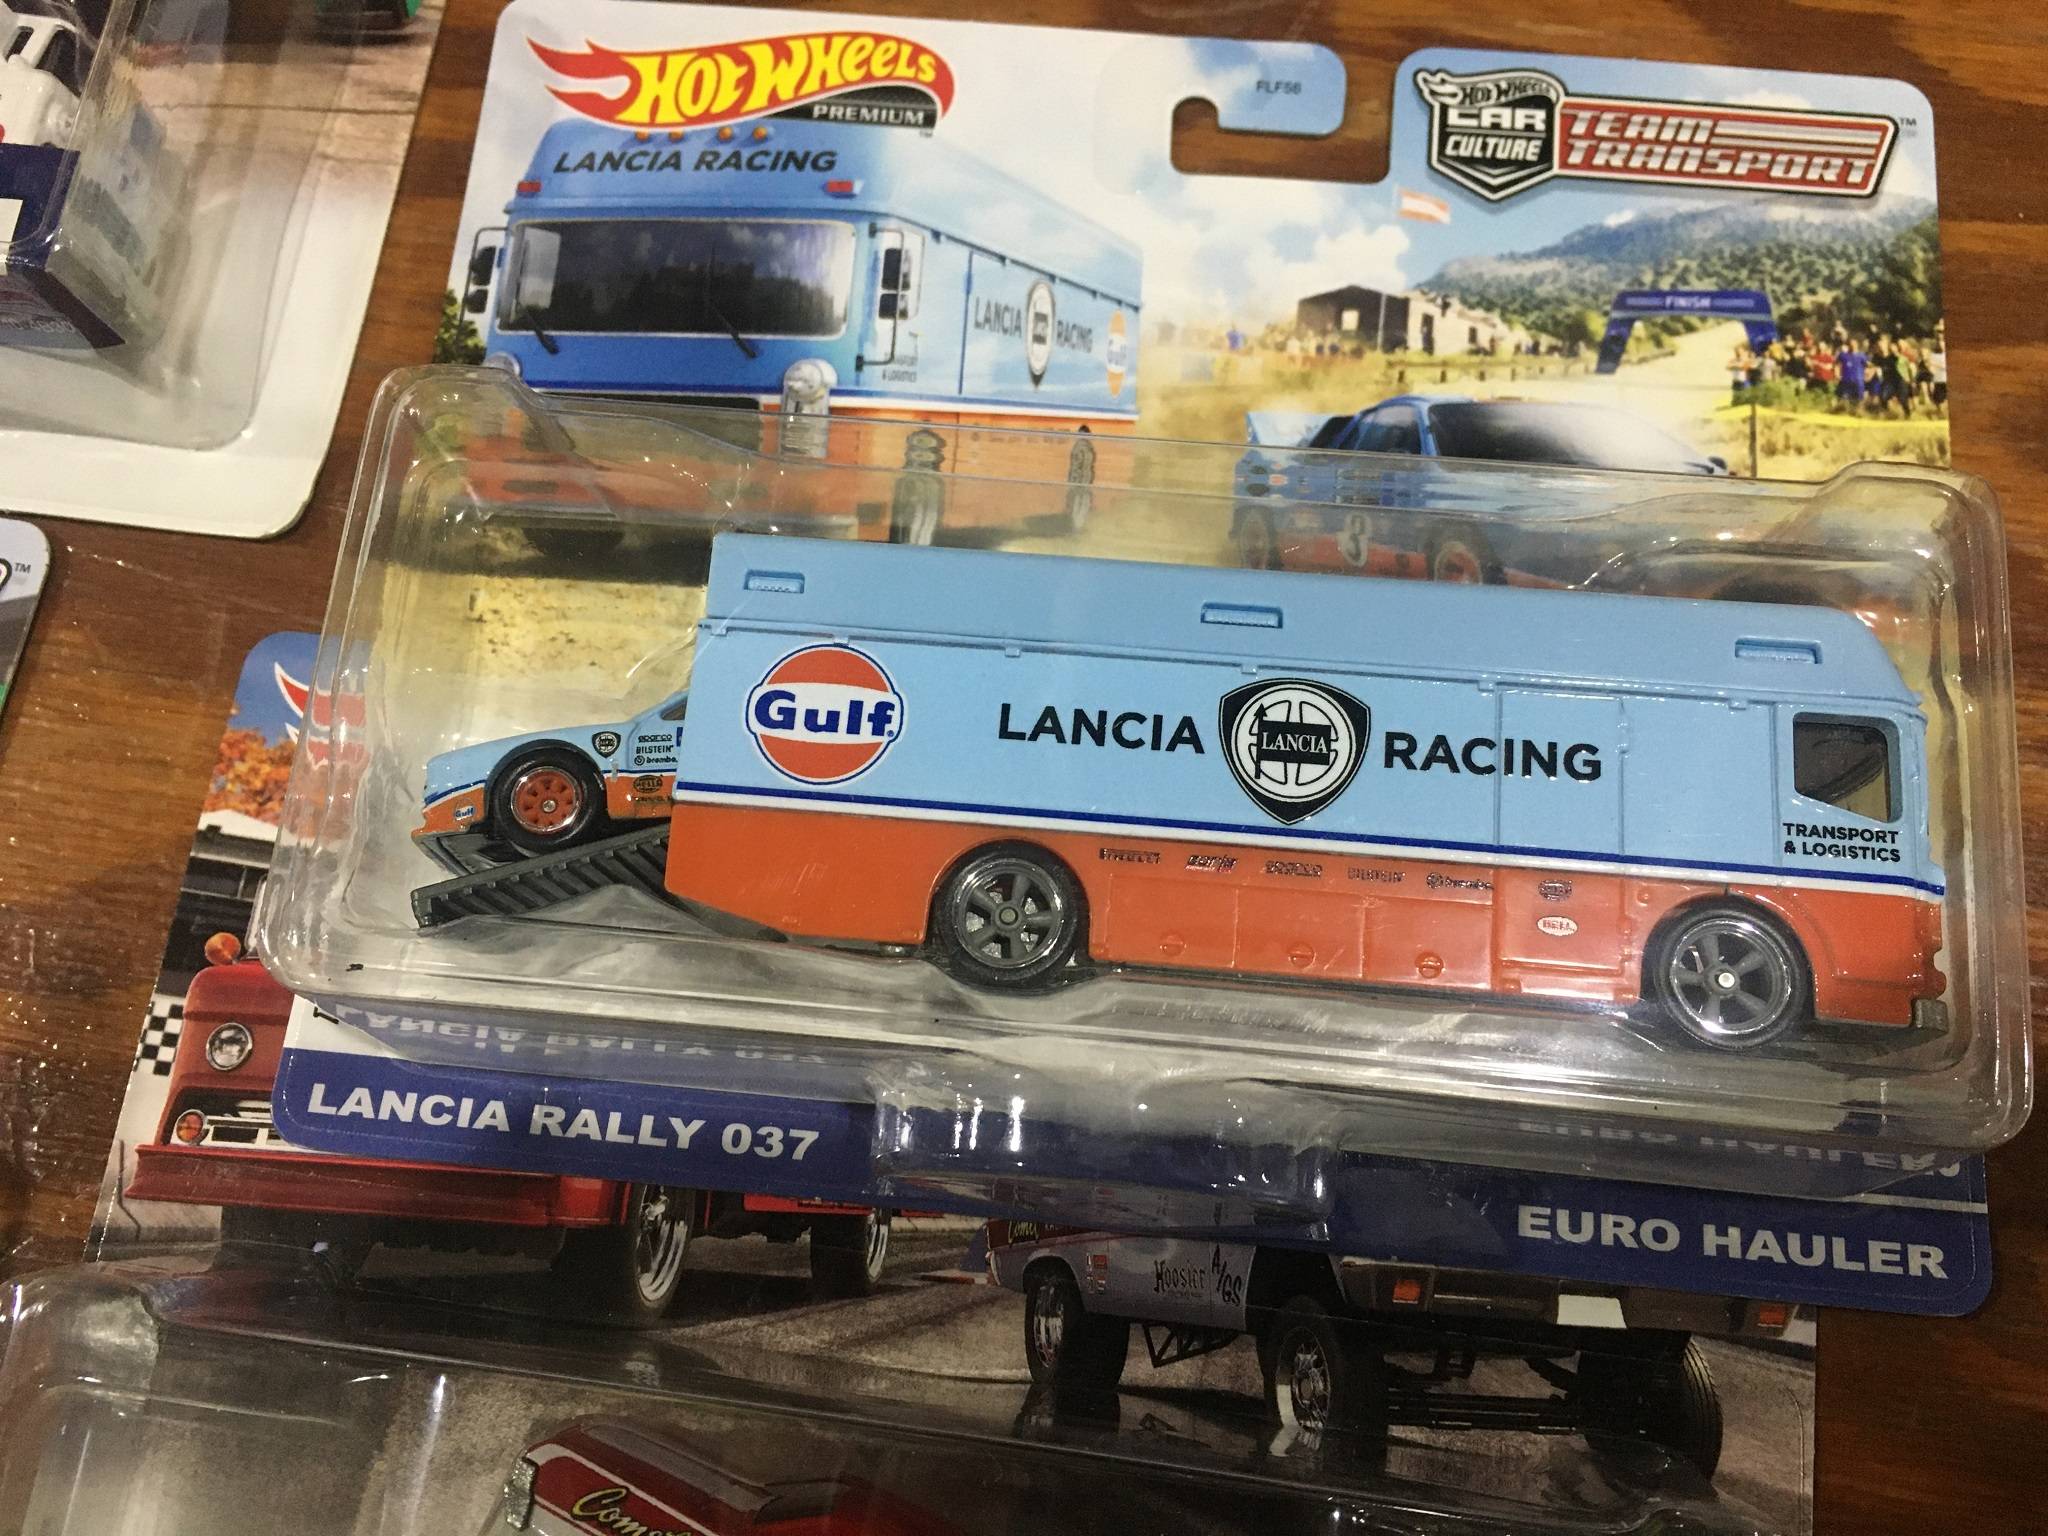 Lancia & Gulf Racing Hotwheels Transporter